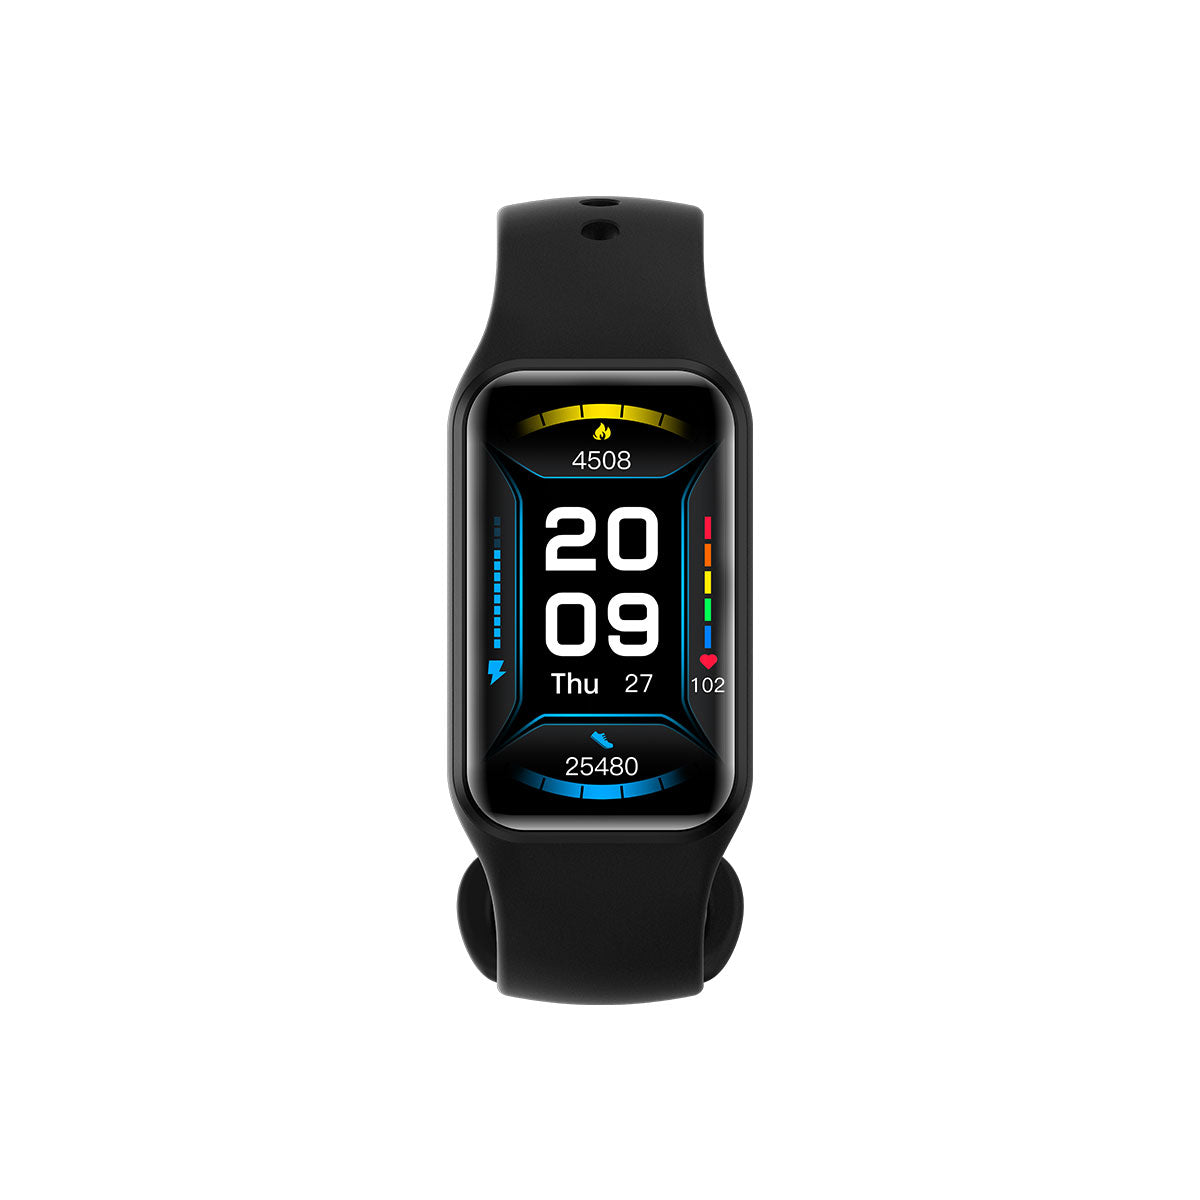 Blackview R1 smartwatch - IP68 connected watch - APP GloryFit